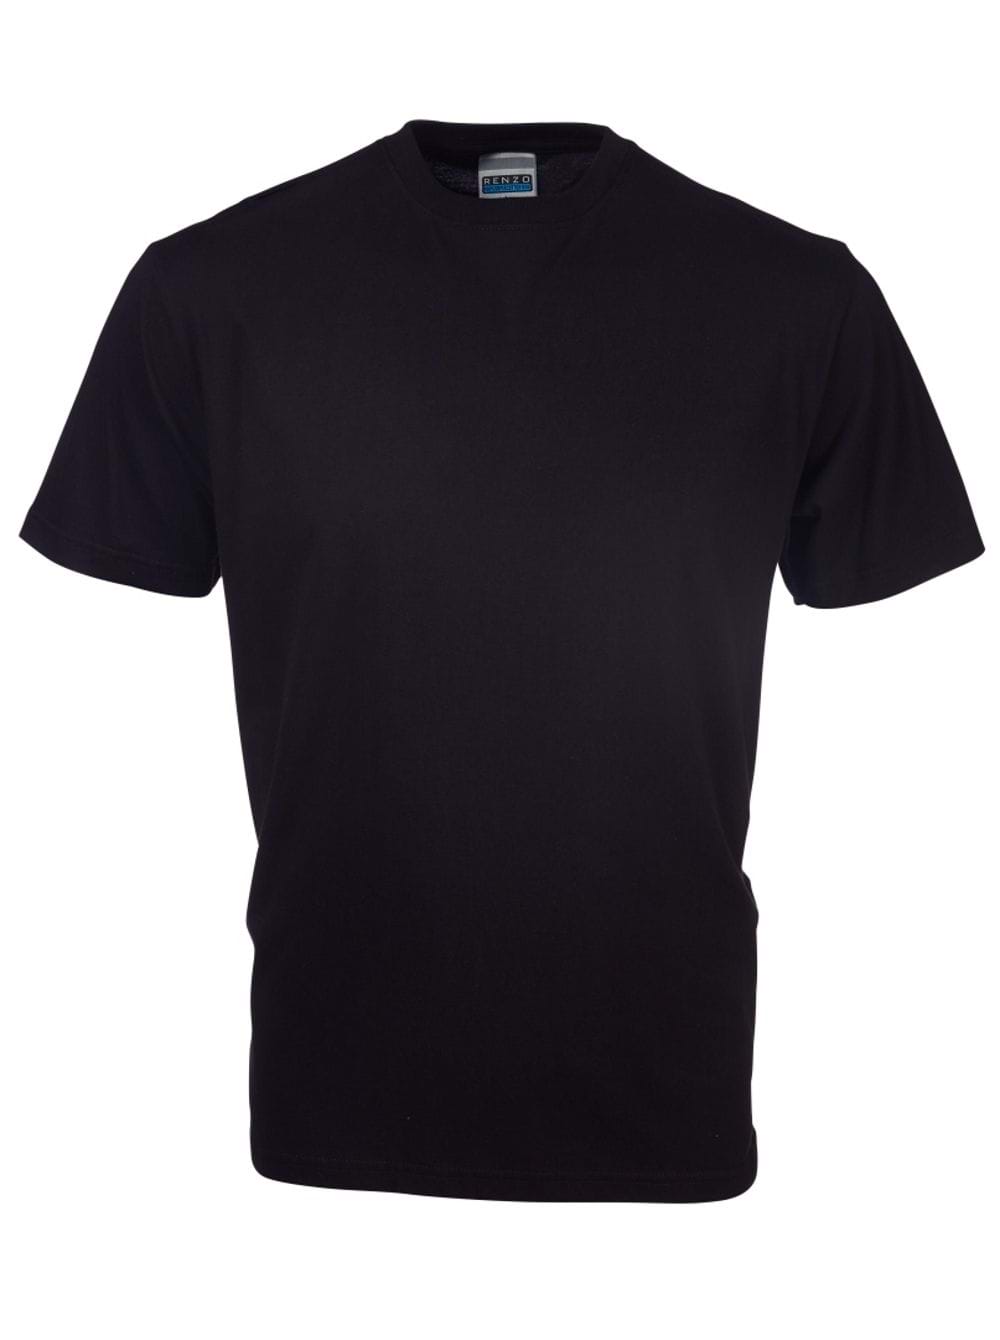 165G Crew Neck T-Shirt - Black / M